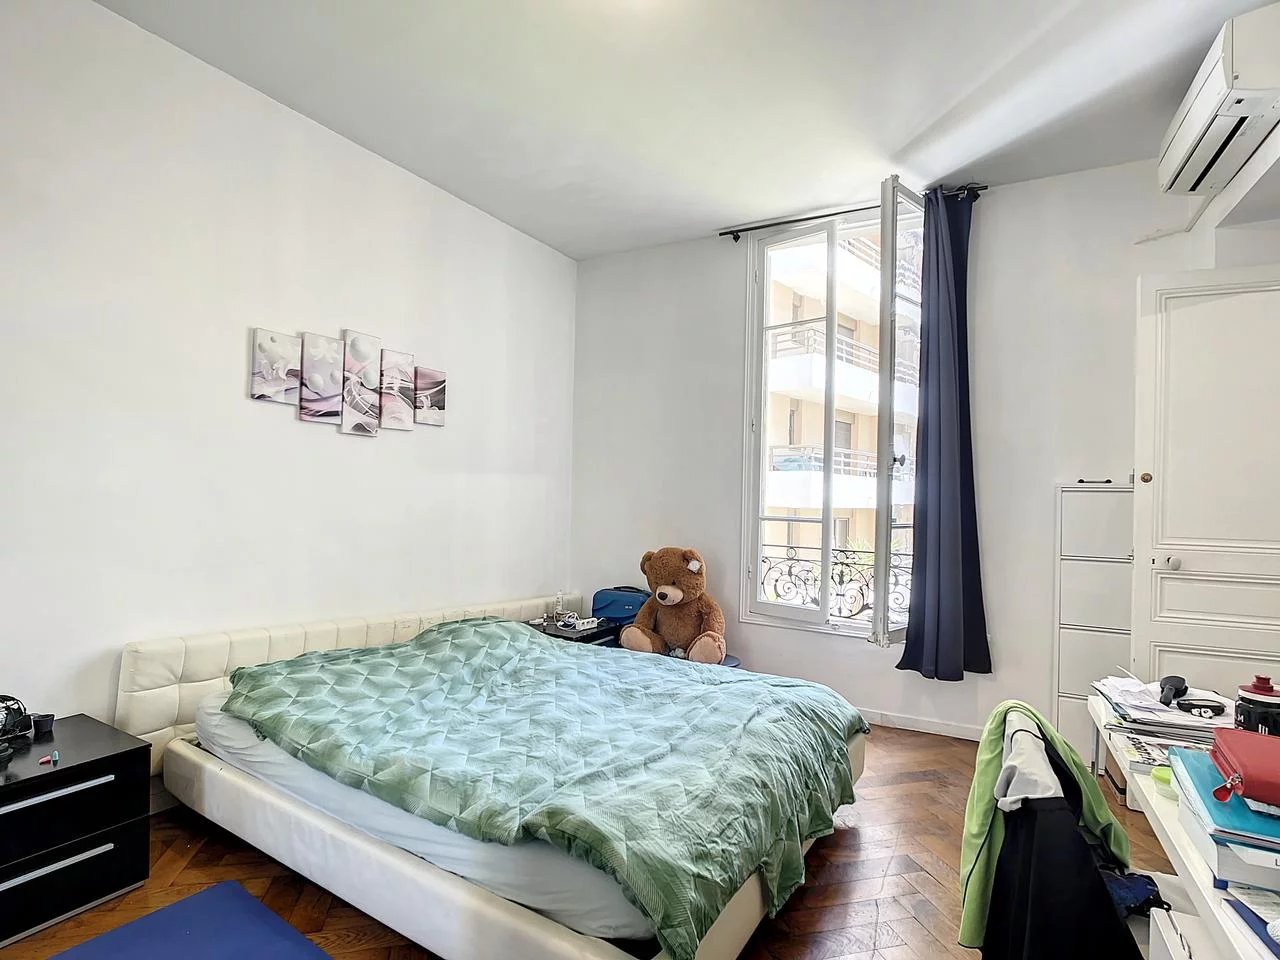 Appartement  6 Locali 134.6m2  In vendita   740 000 €